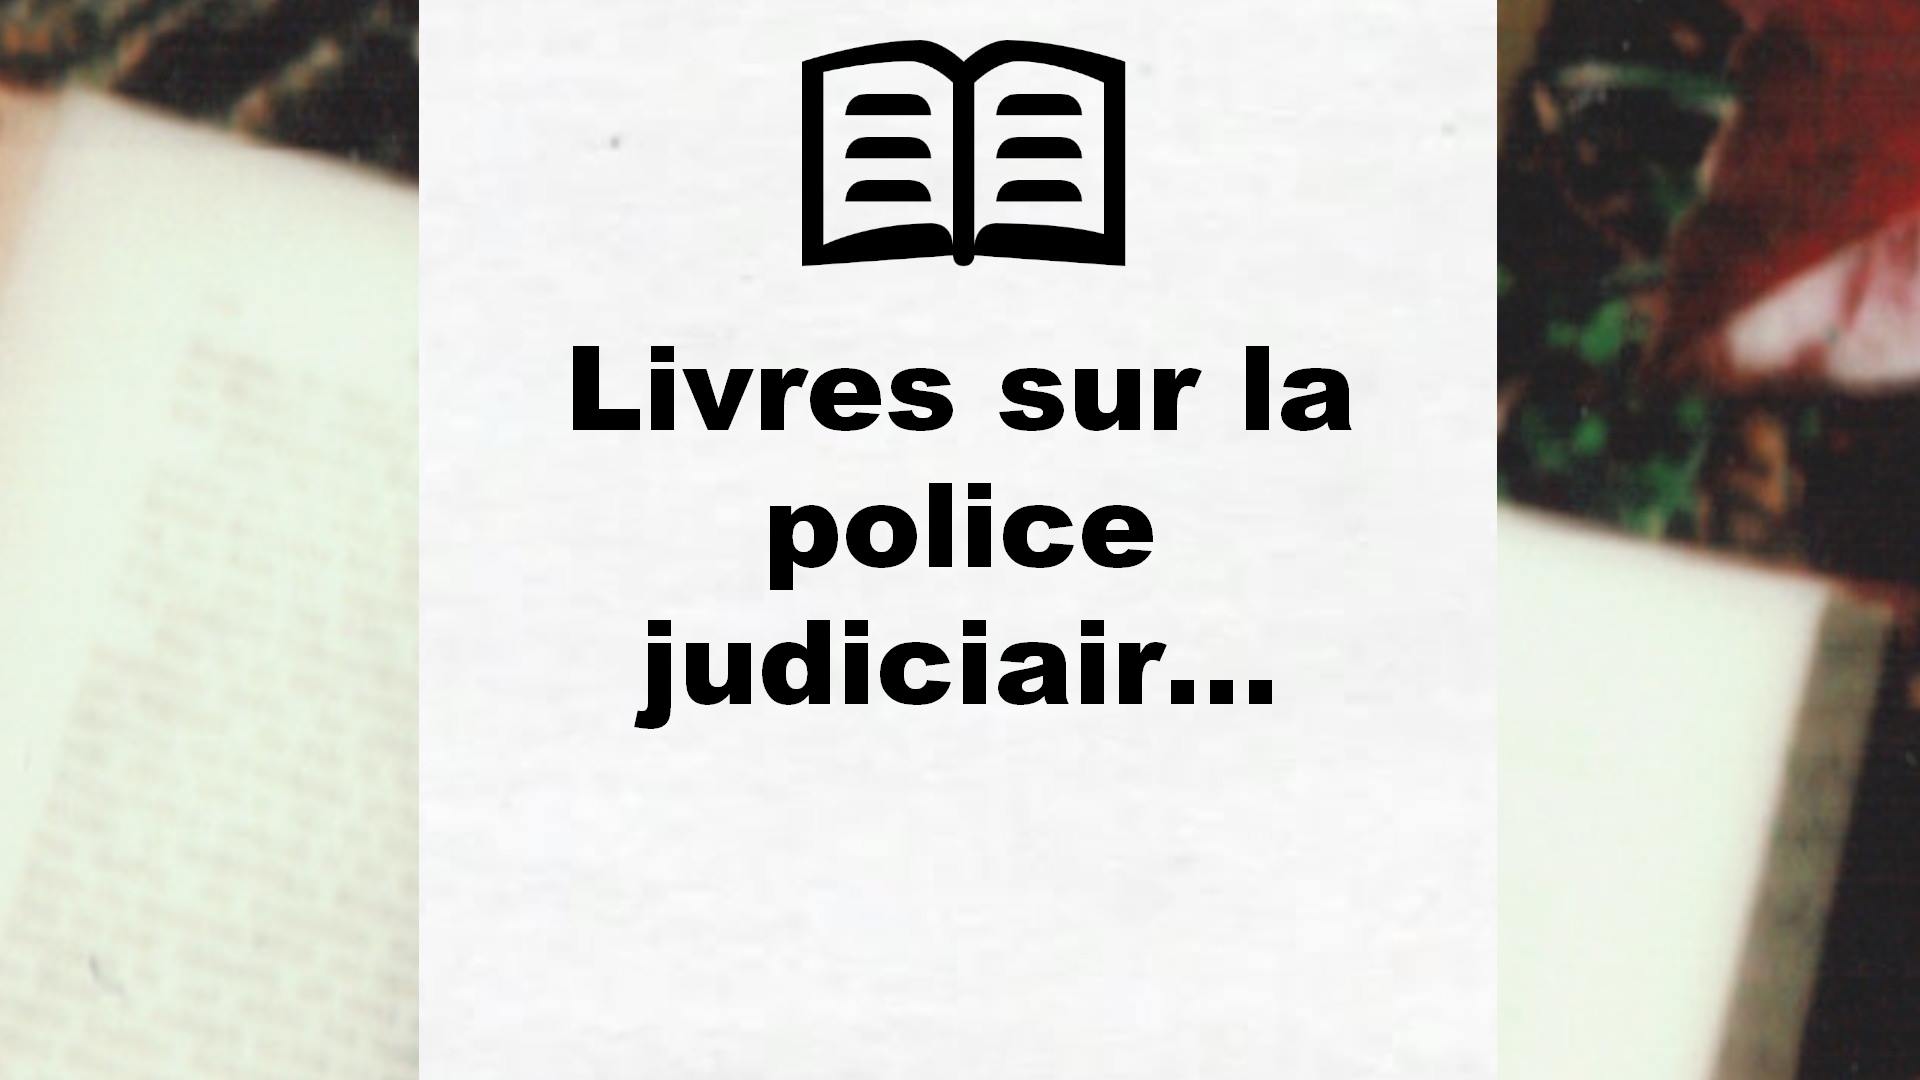 Livres sur la police judiciaire